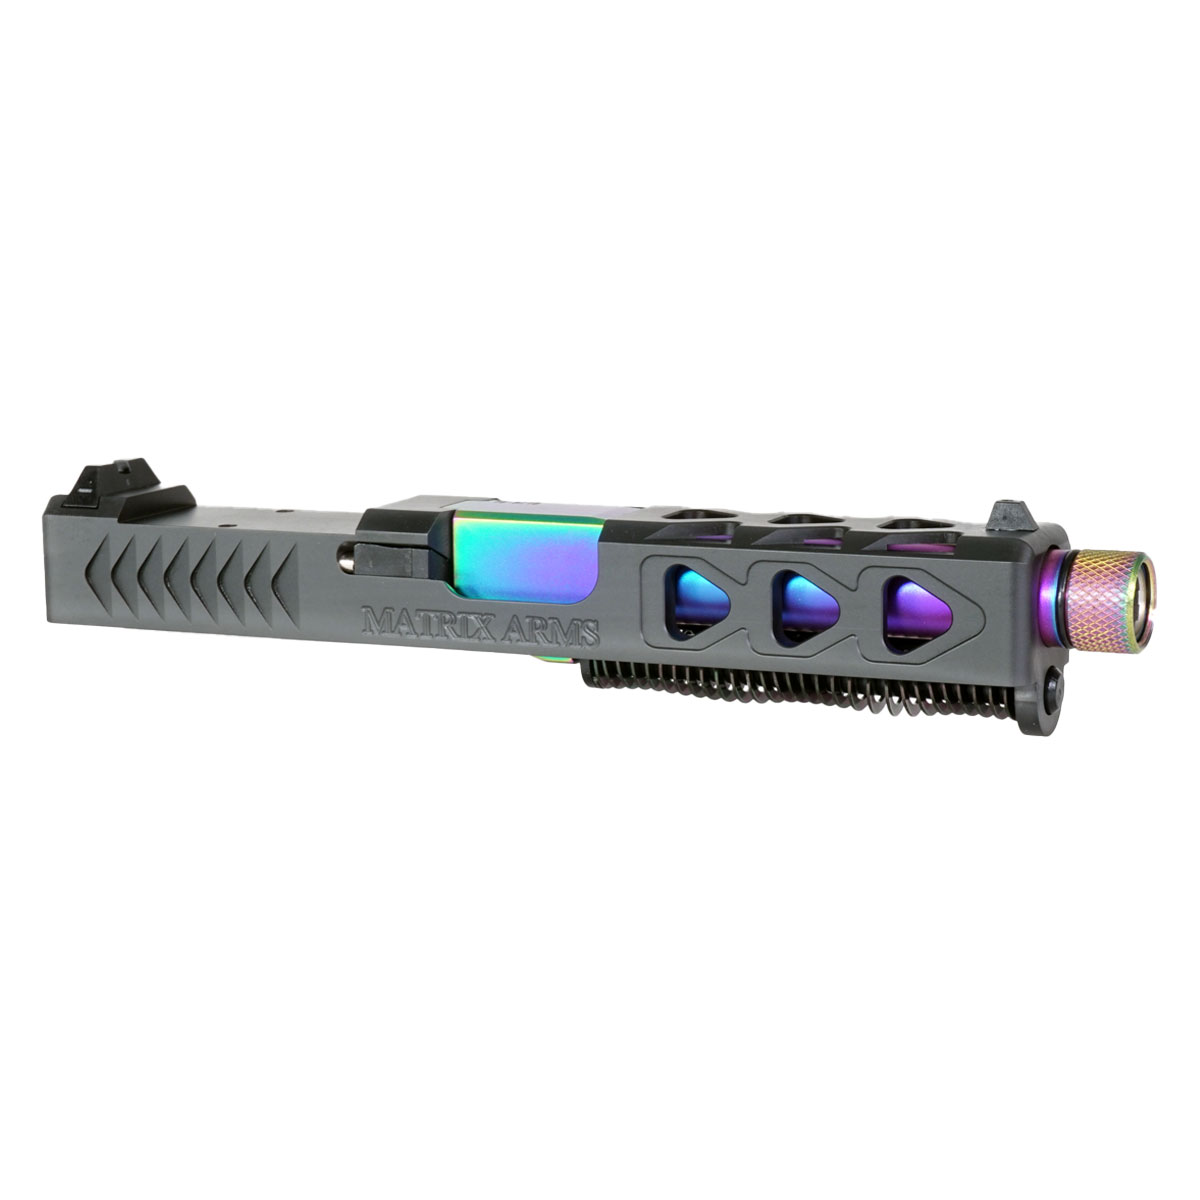 DTT 'Rainmaker' 9mm Complete Slide Kit - Glock 19 Gen 1-3 Compatible